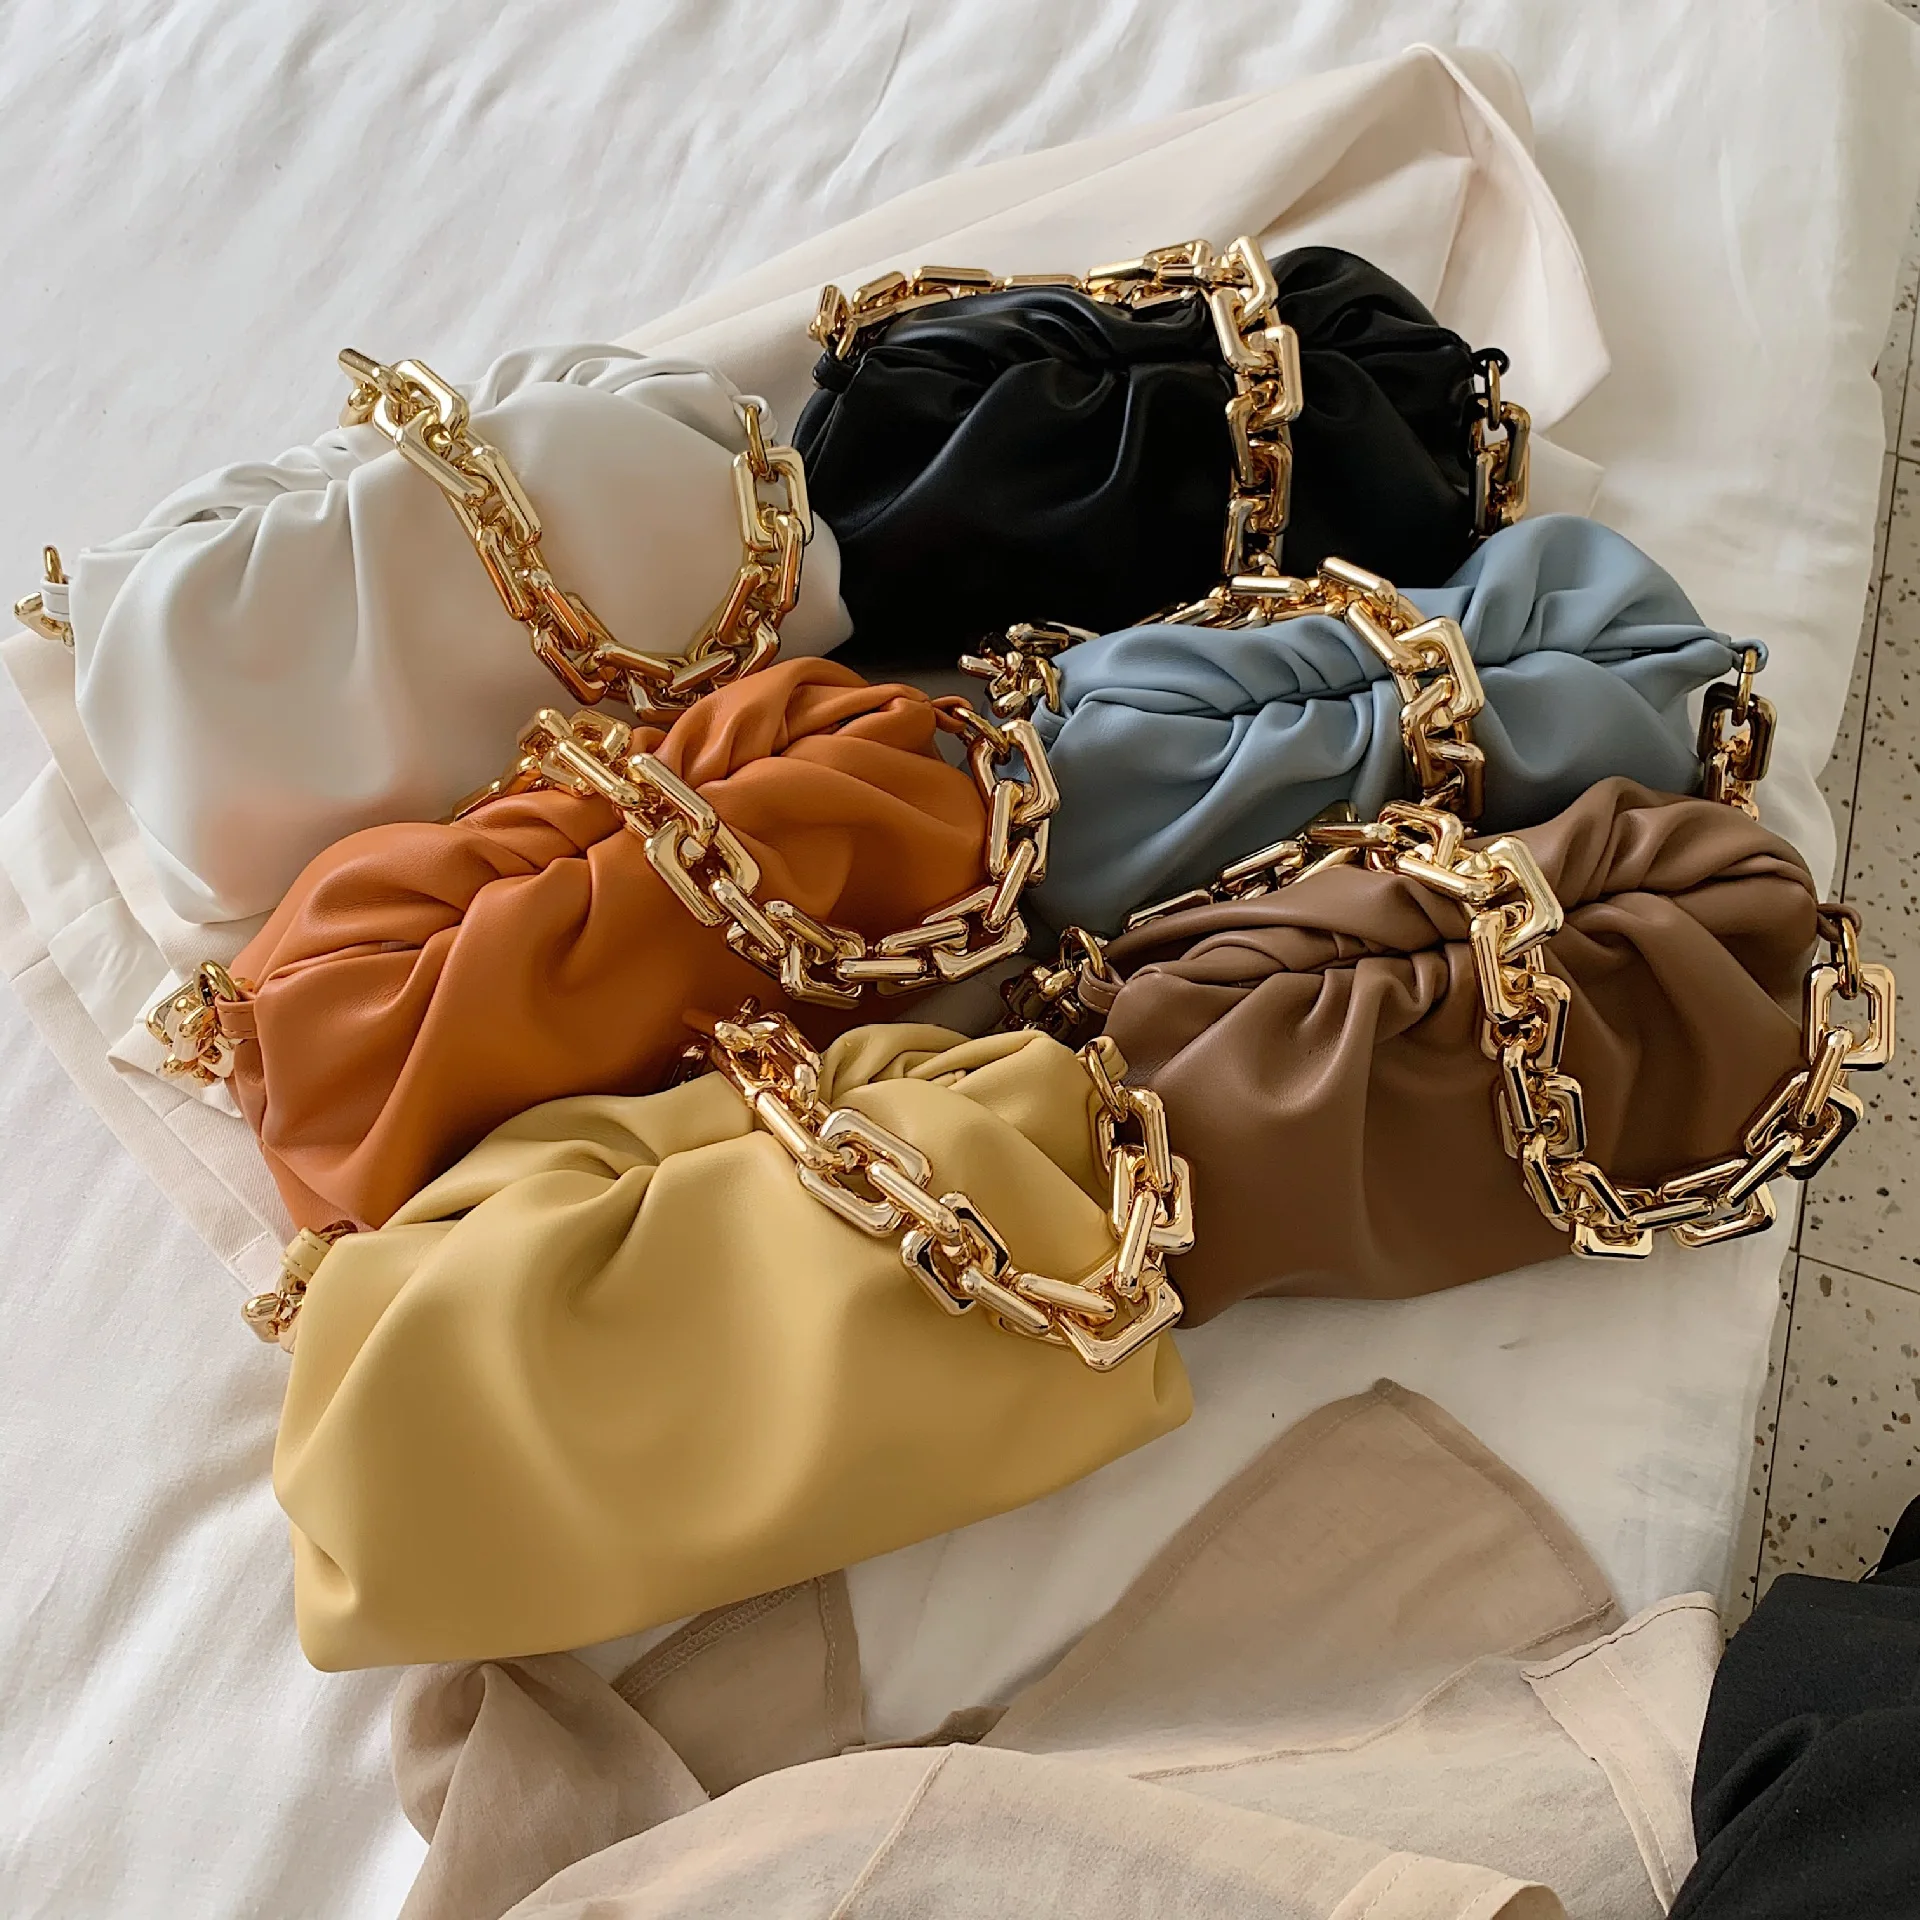 

Tasche Bolsos De Mano Clutch Dumpling Tote Pouch Women Fashion Handbags Ladies Shoulder Cloud Bag With Gold Chain For Women, Customizable